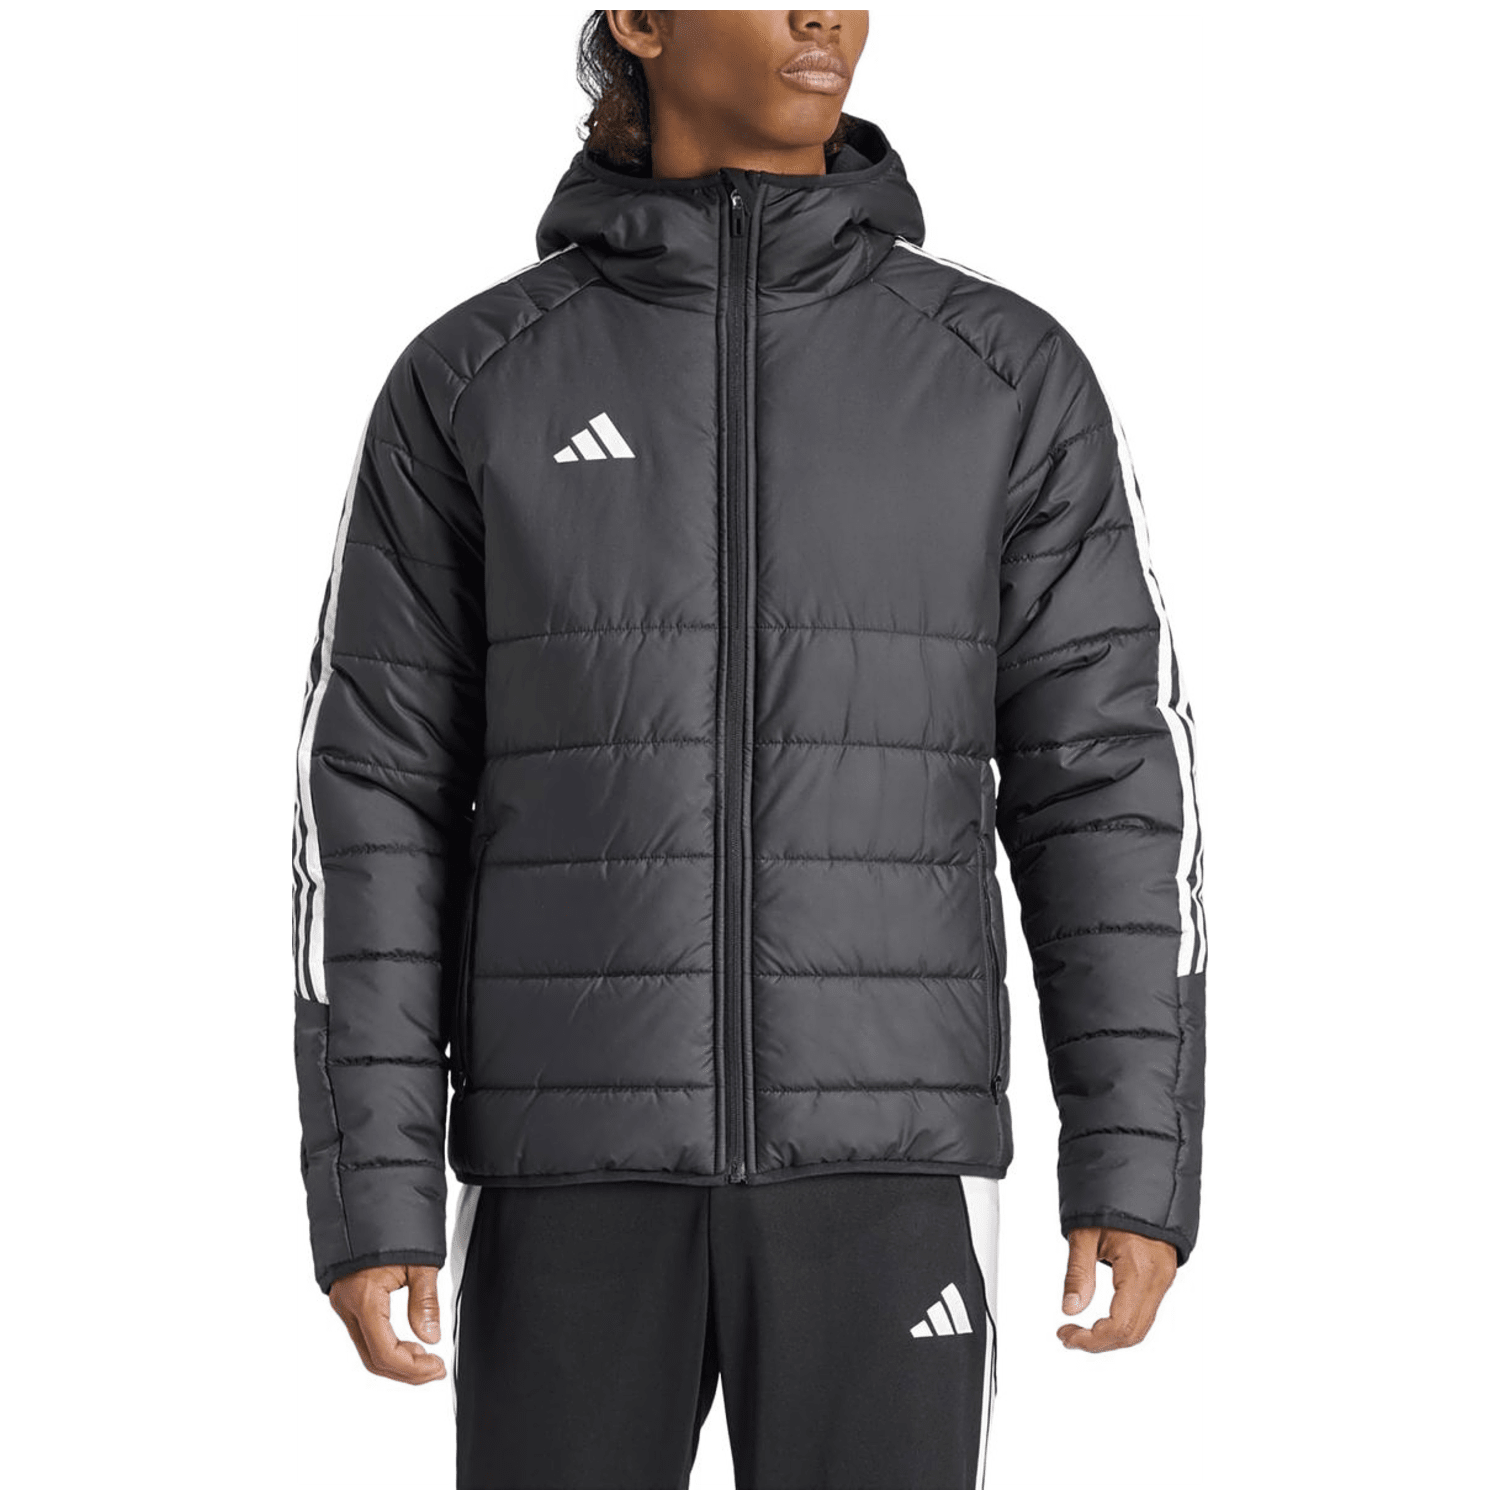 Adidas Tiro24 Winter Jacket Herren